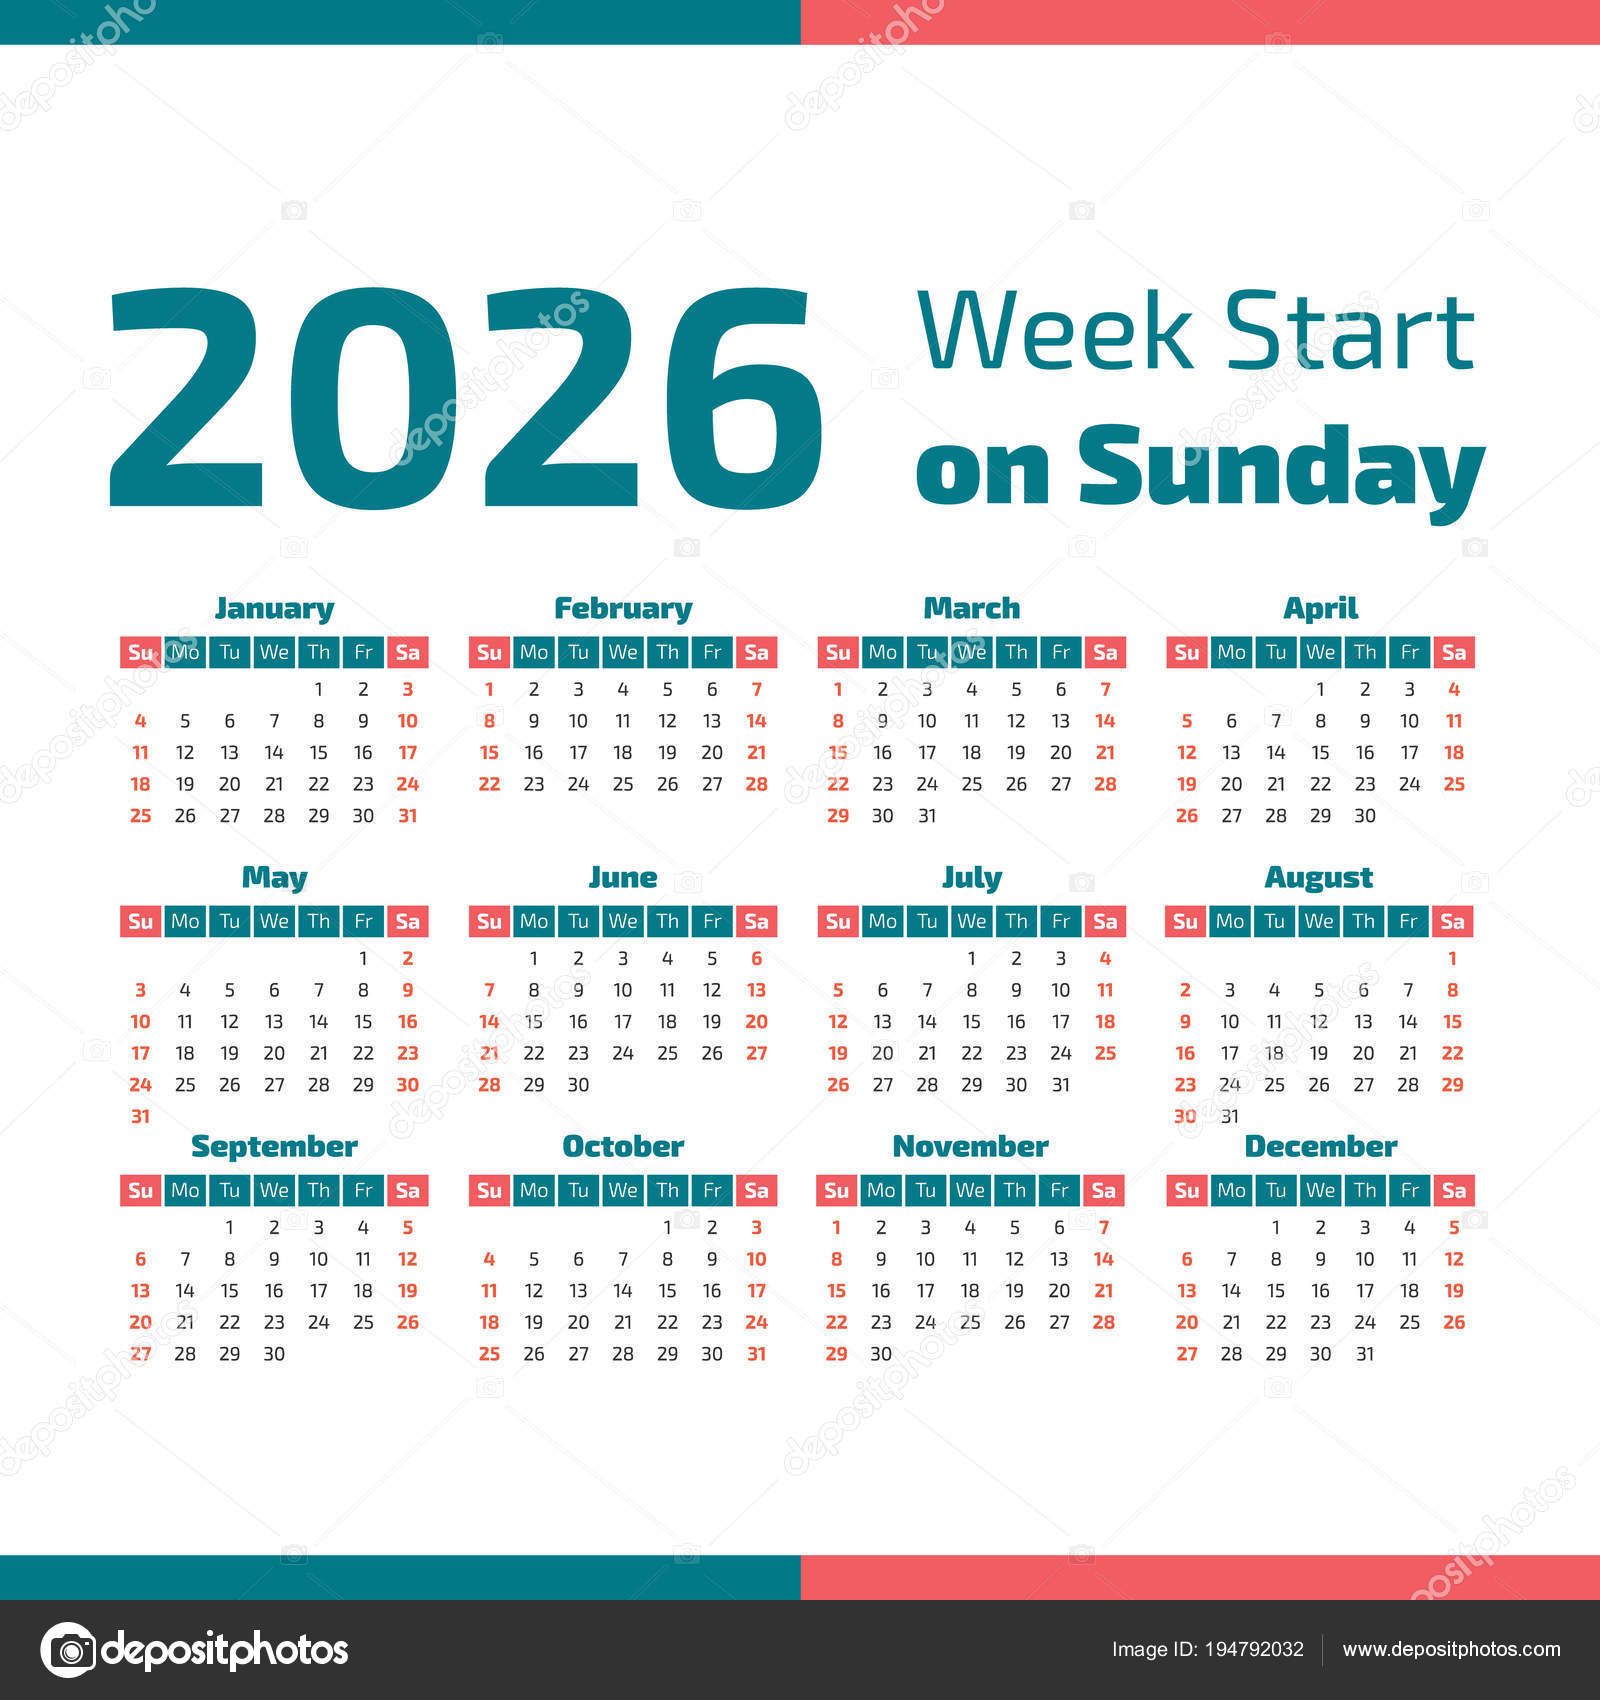 2032 year vintage calendar weeks start on monday Vector Image